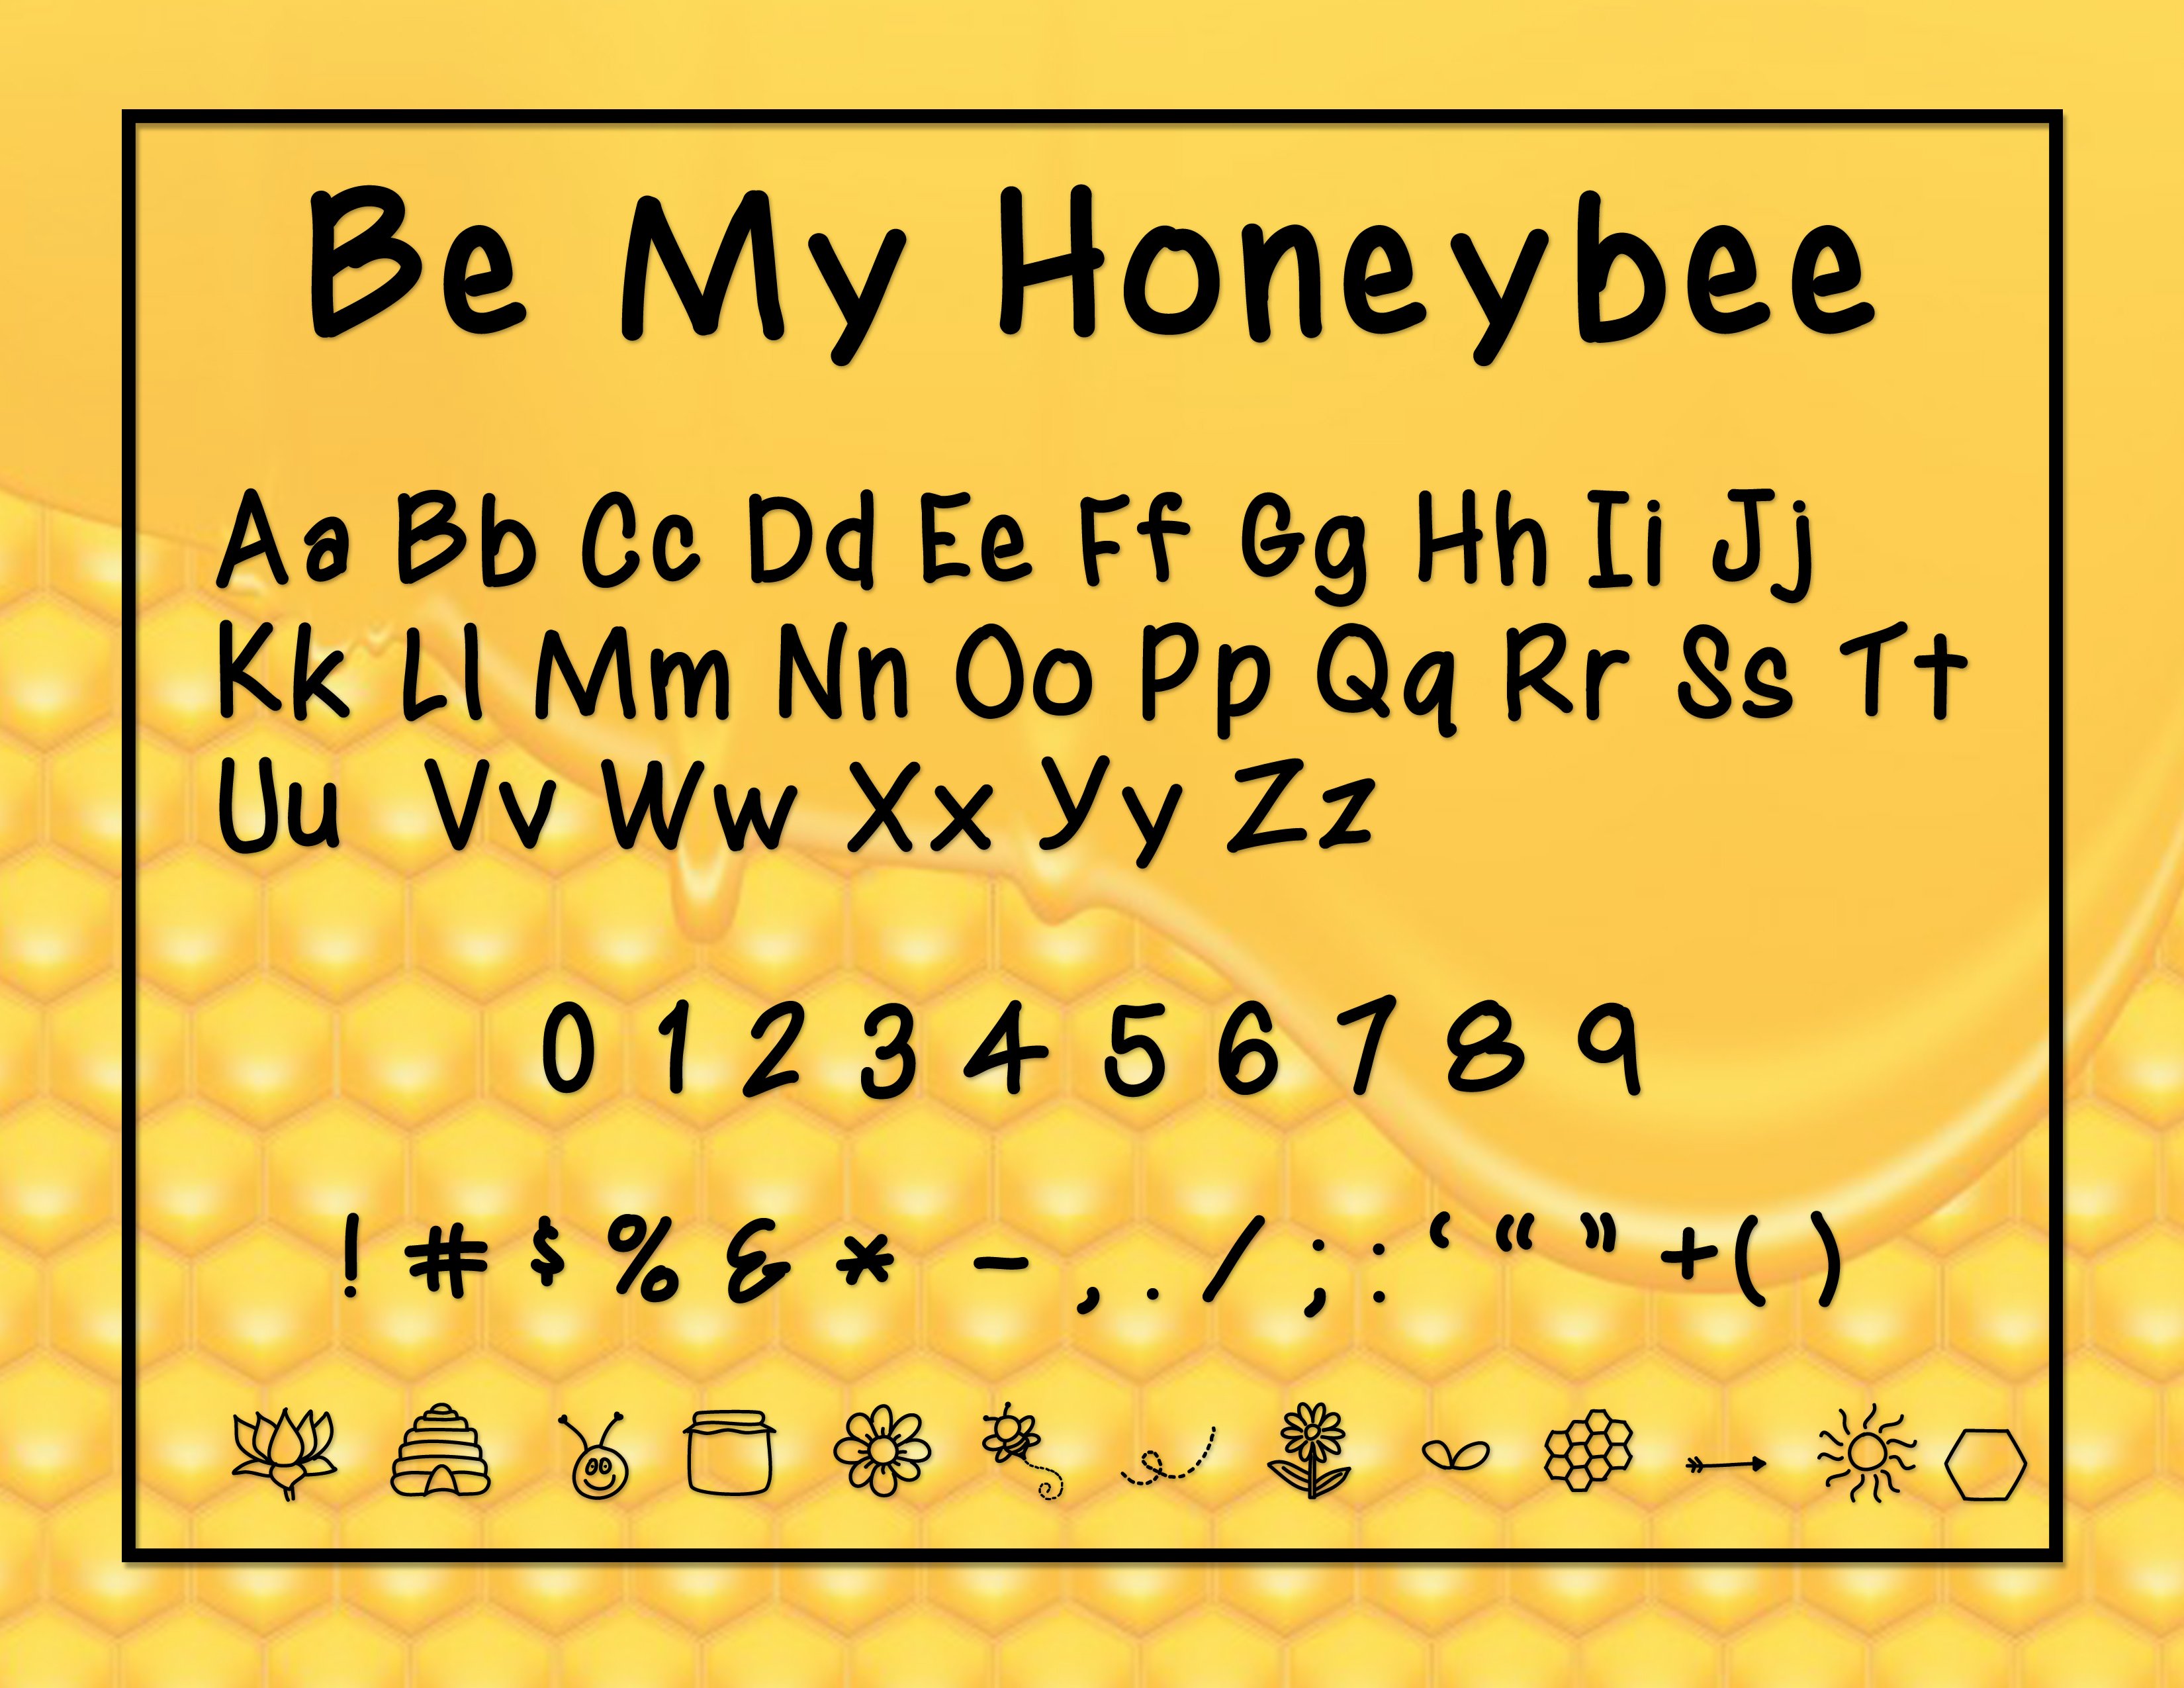 Be My Honeybee preview image.